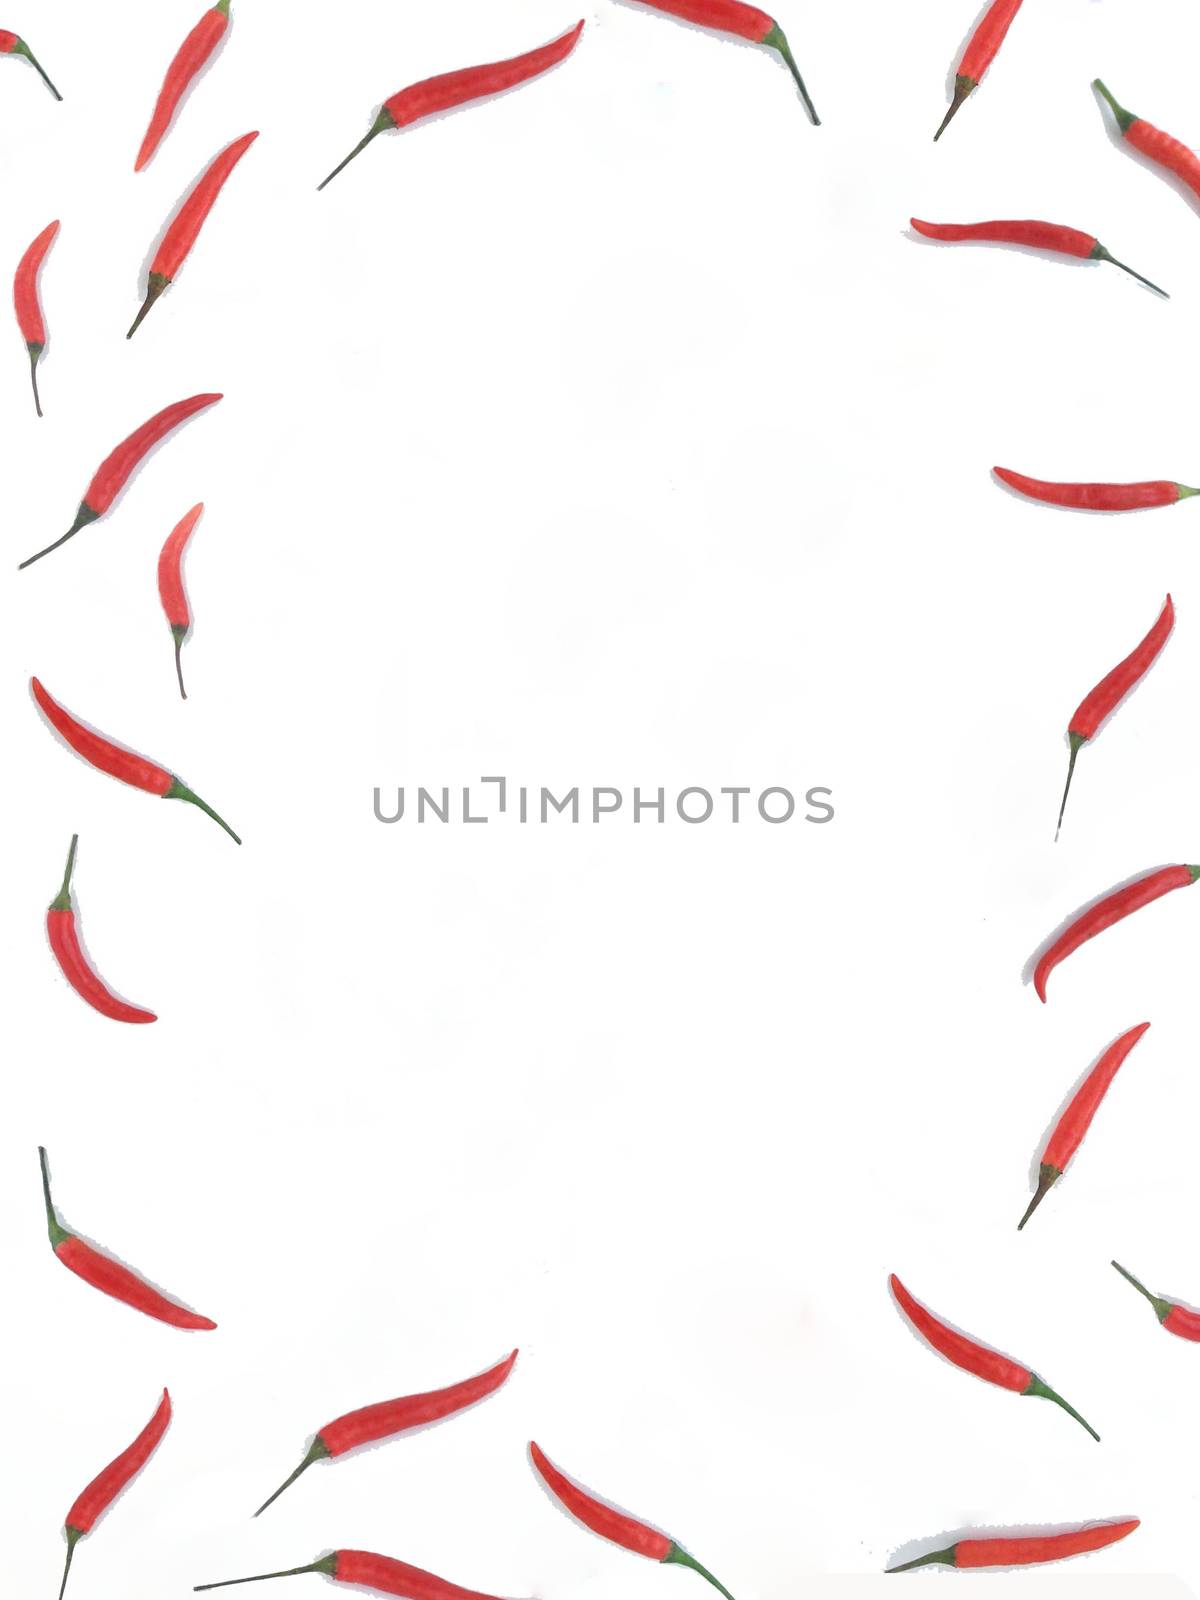 chili pattern by Bowonpat